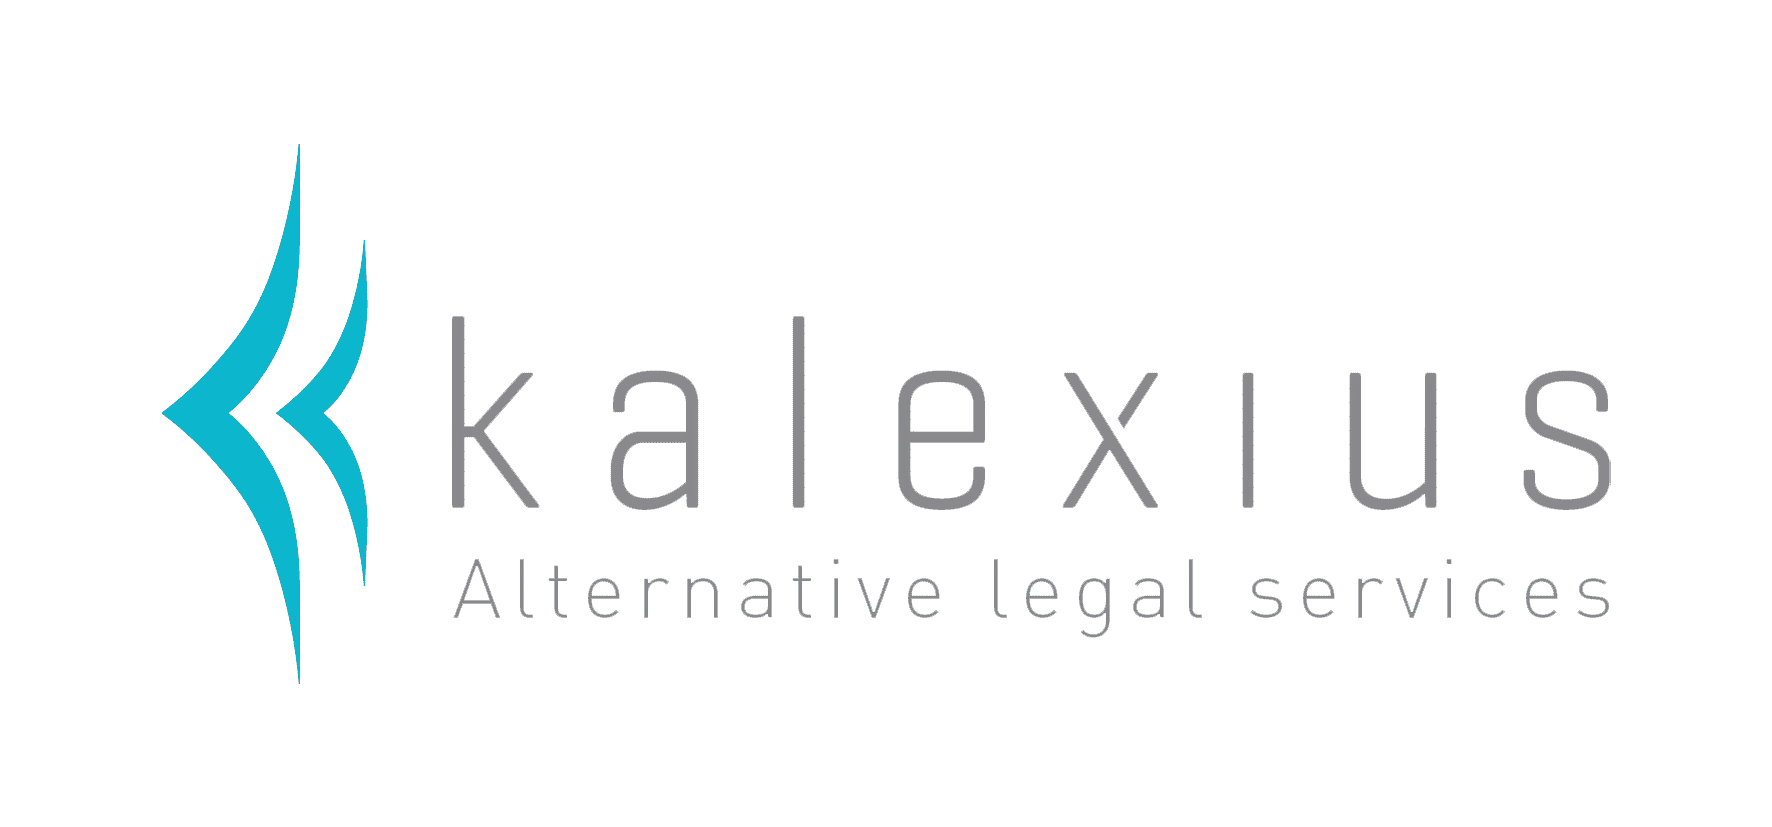 Kalexius-logo-transparent